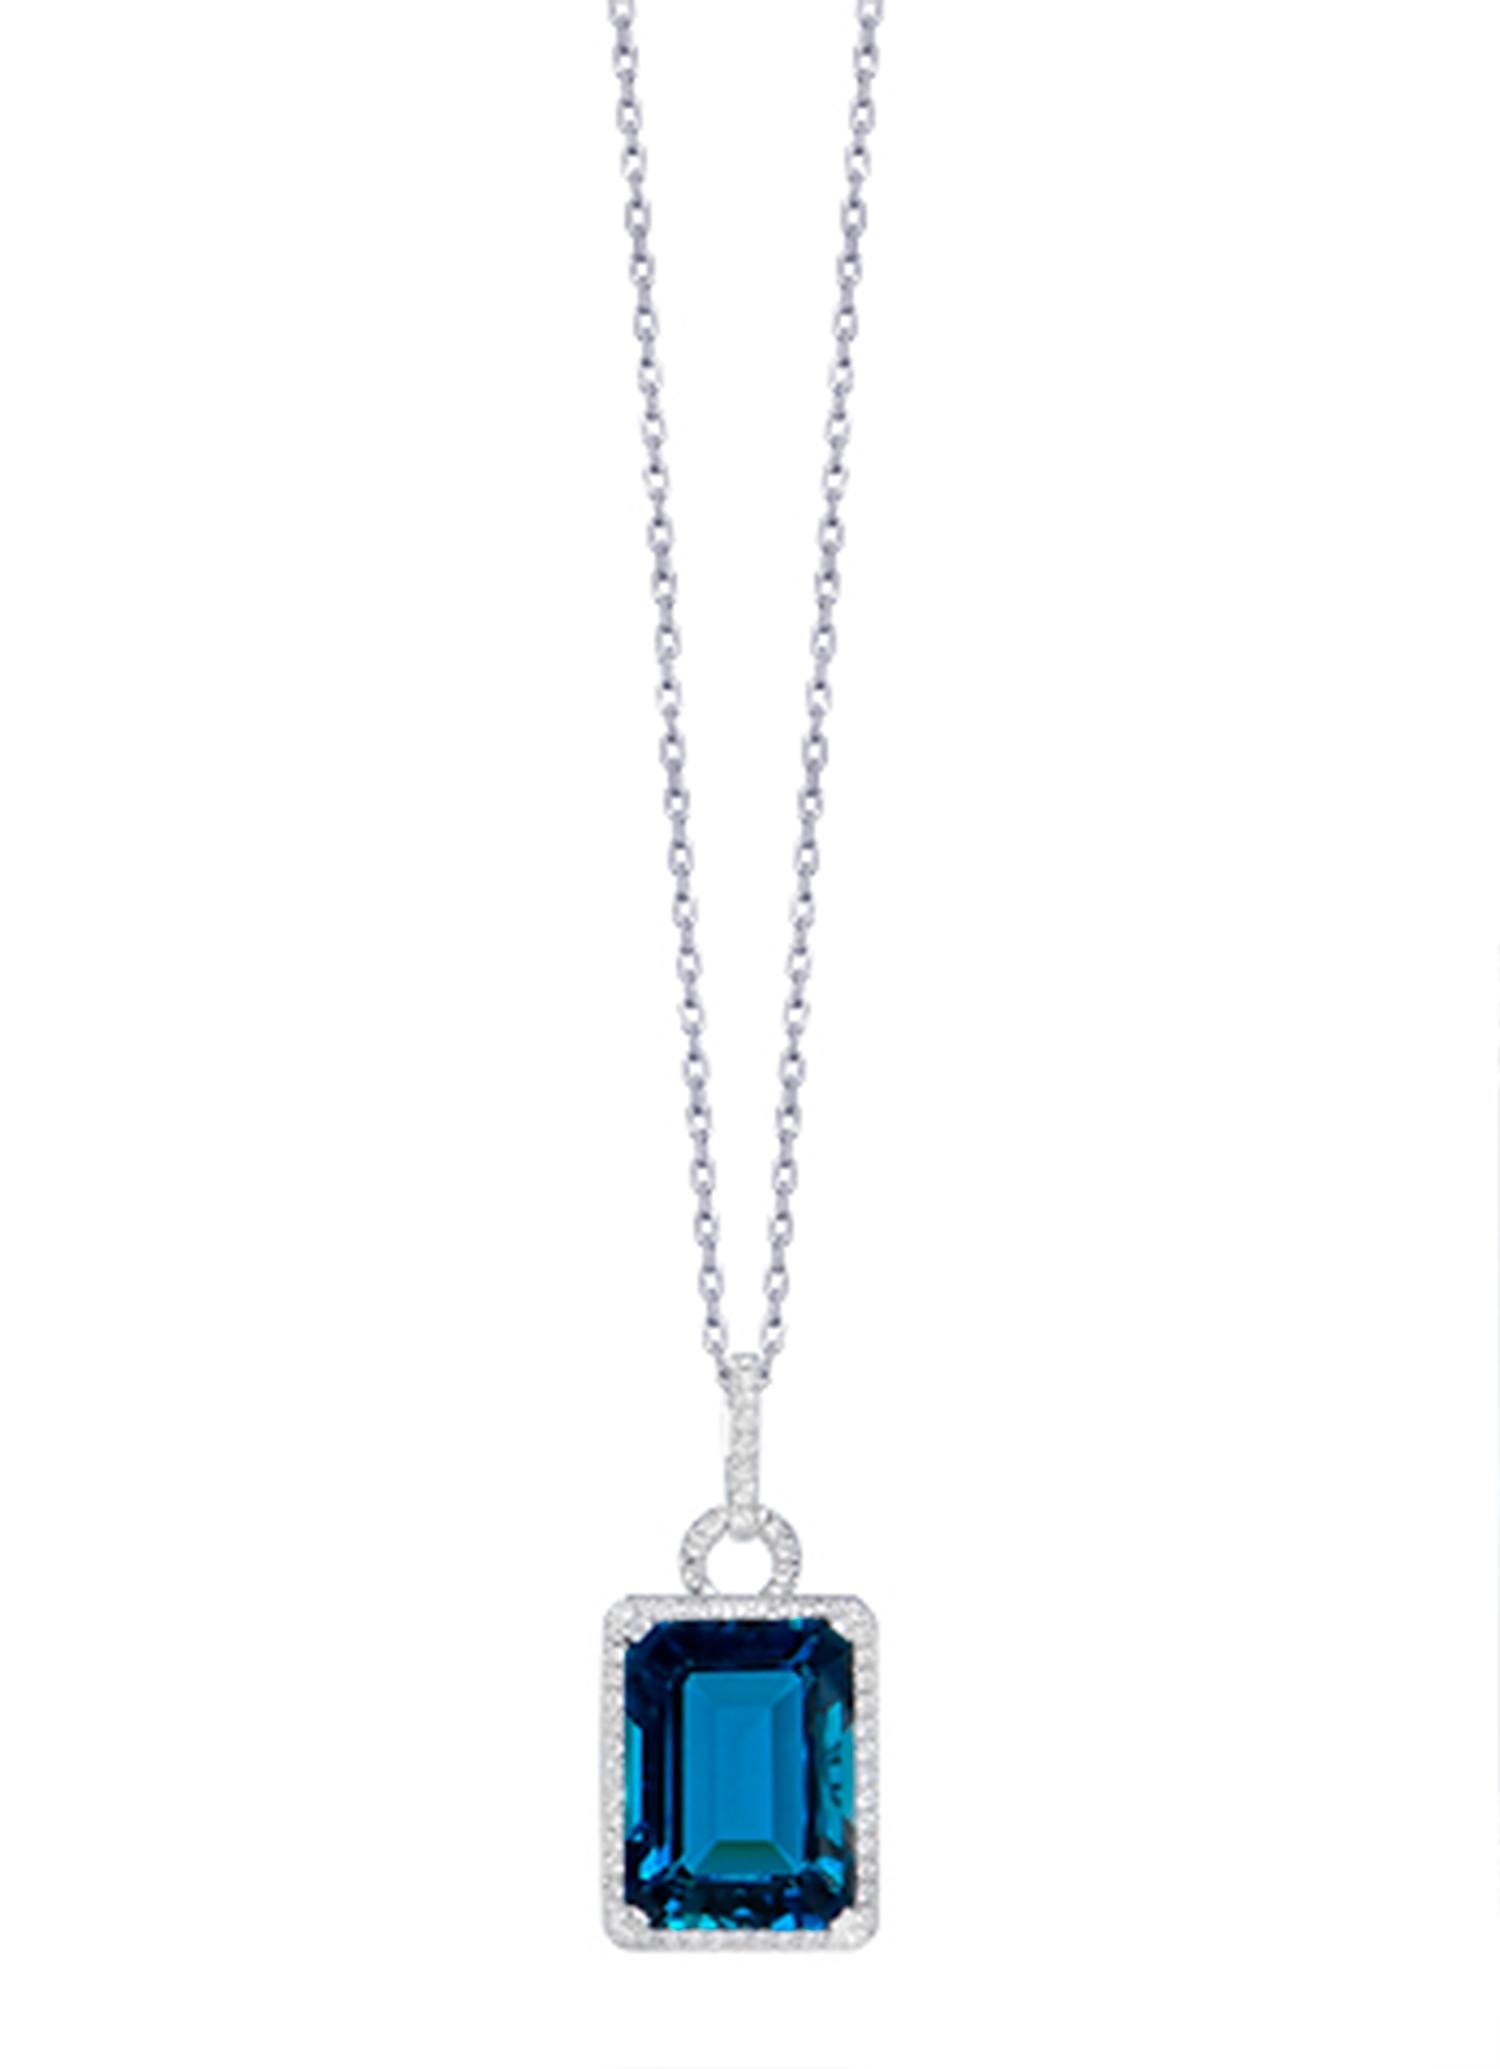 Emerald Cut London Blue Topaz Pendant Necklace With Diamonds 14.47 Carats 18K White Gold For Sale